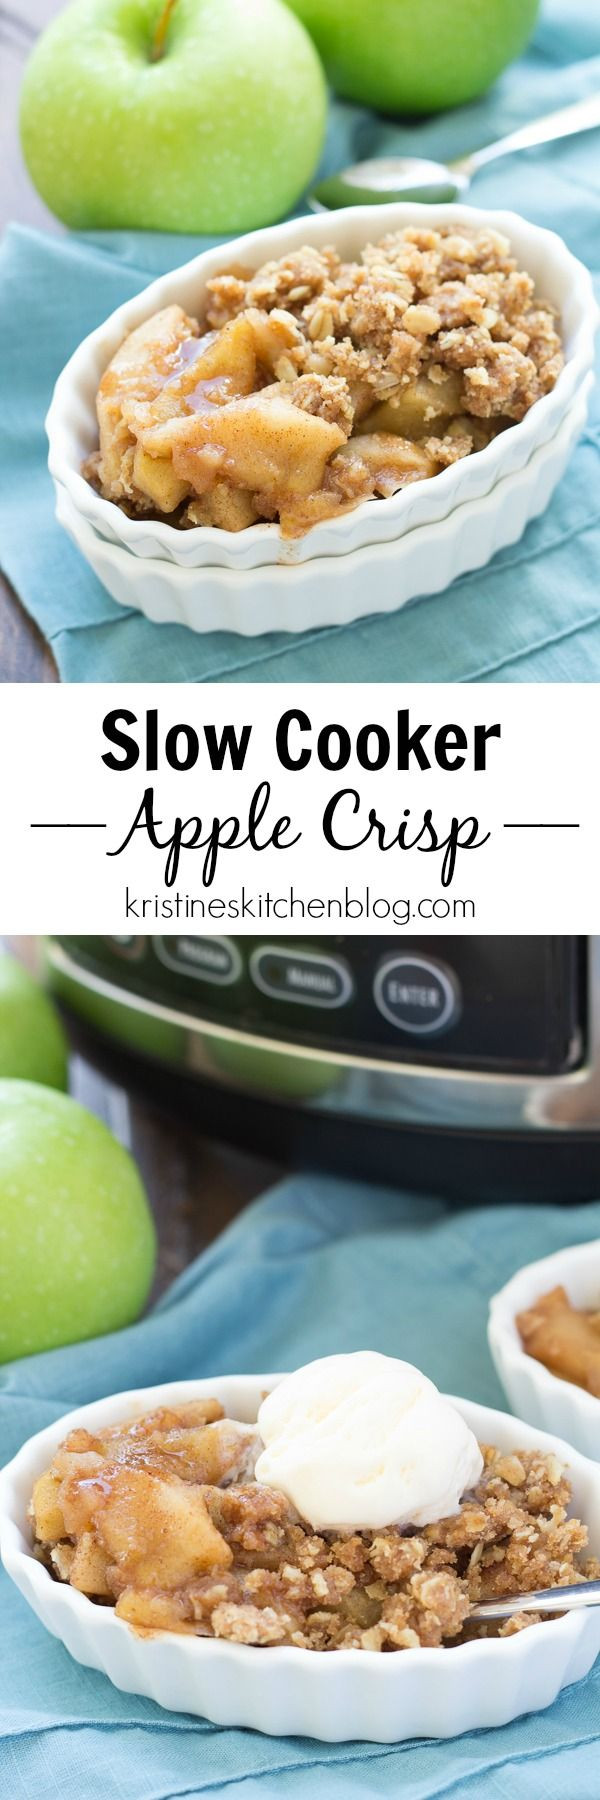 Slow Cooker Desserts Healthy
 Best 25 Apple crisp easy ideas on Pinterest